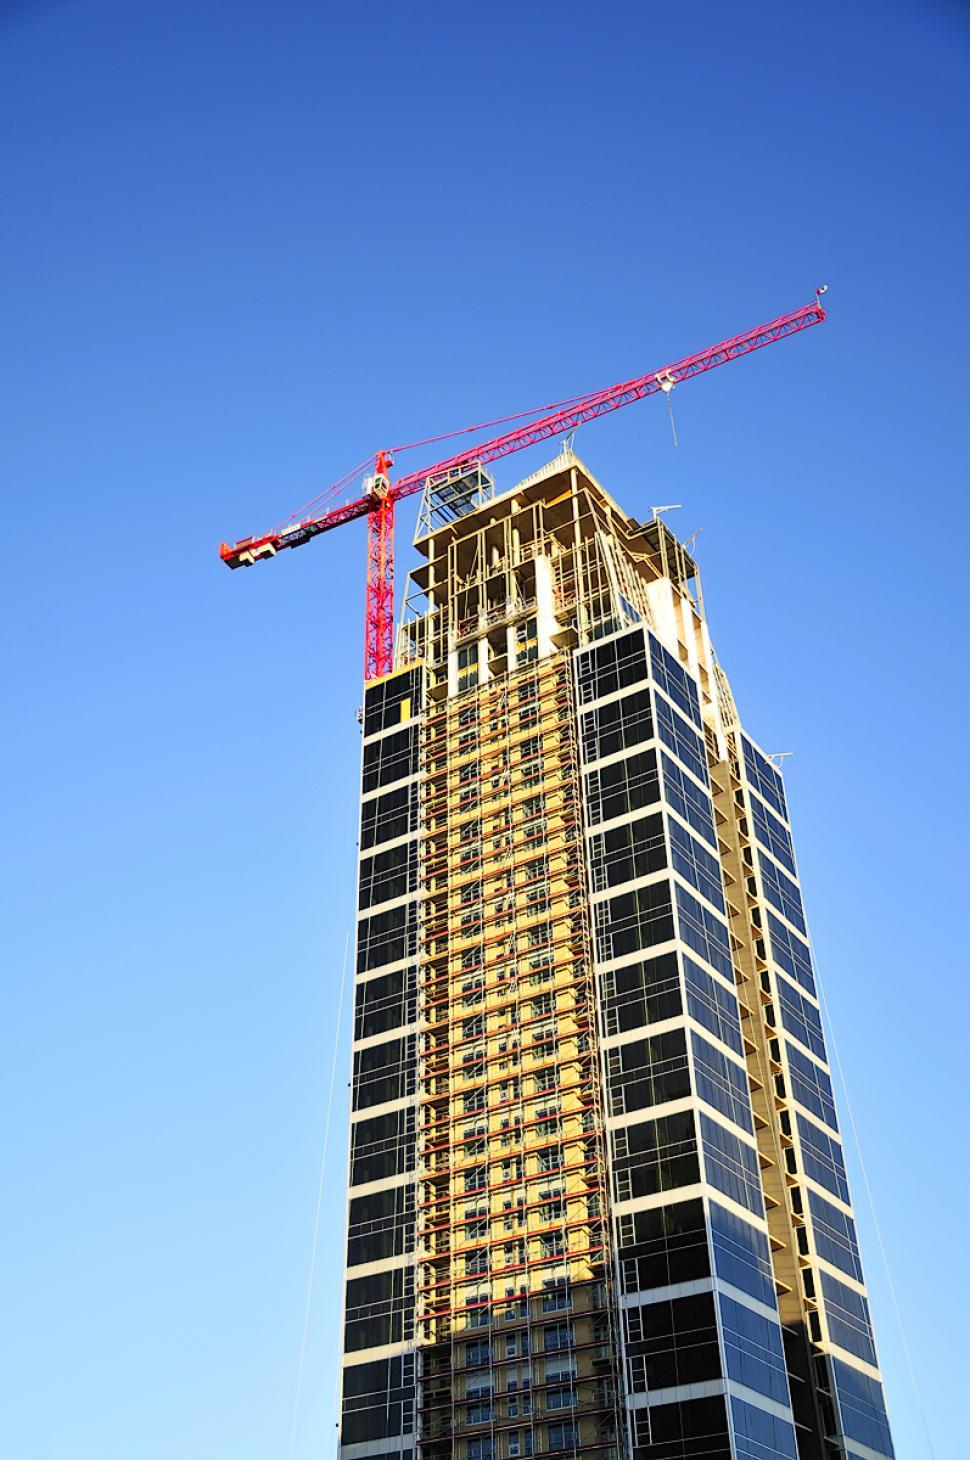 Free Image of Building a Sky Scraper 